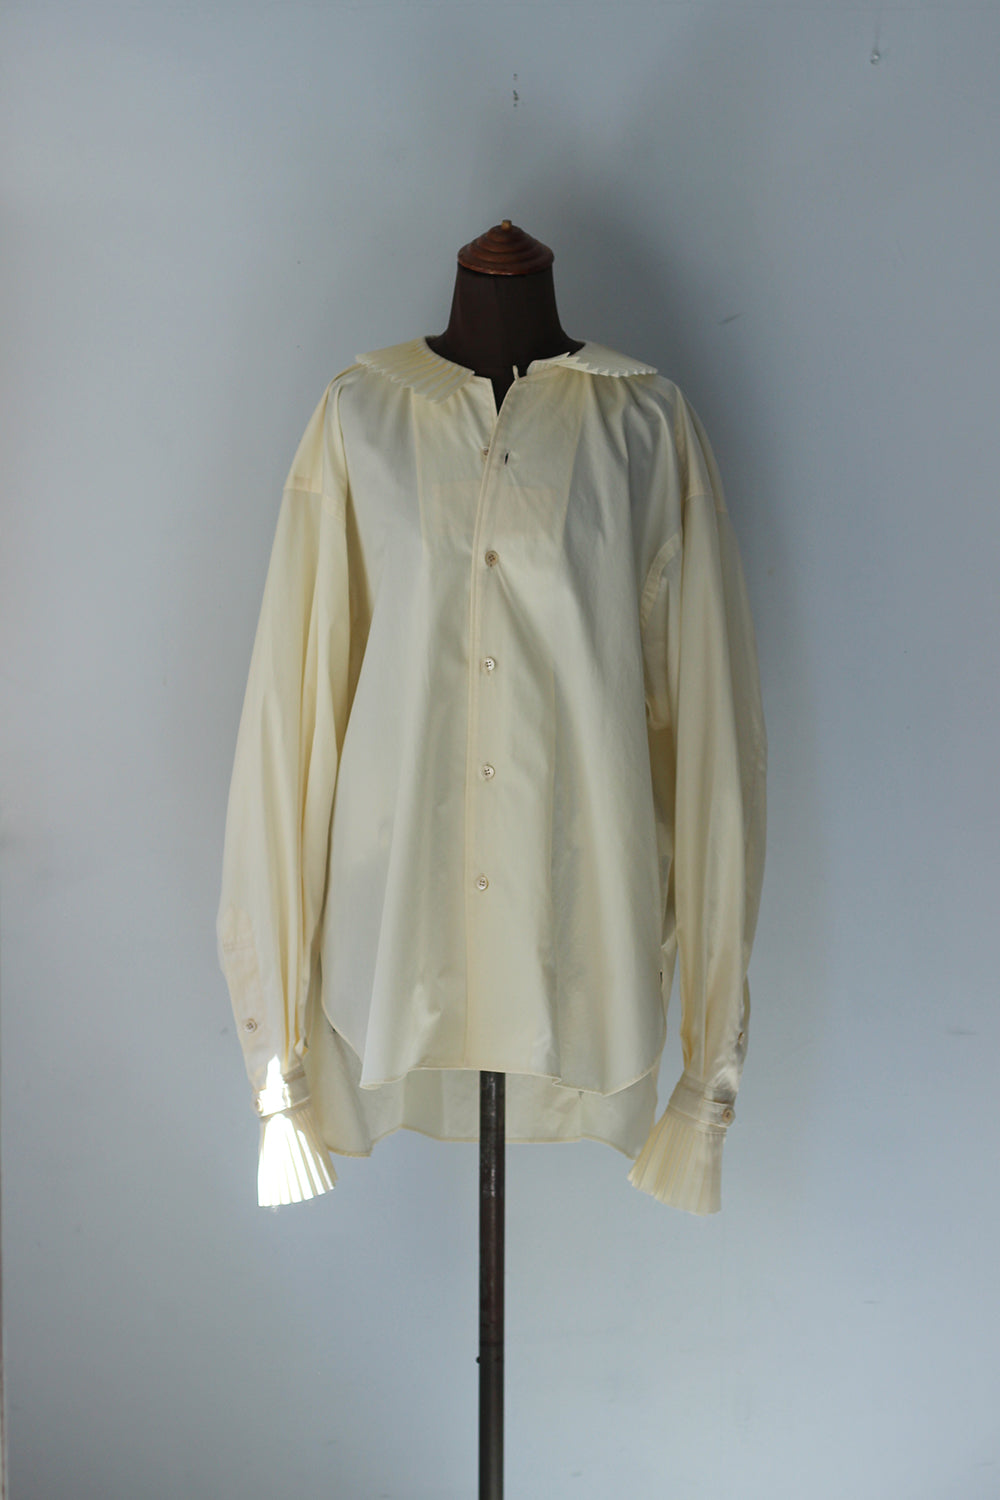 JUN MIKAMI "pleats collar shirt" (cream)